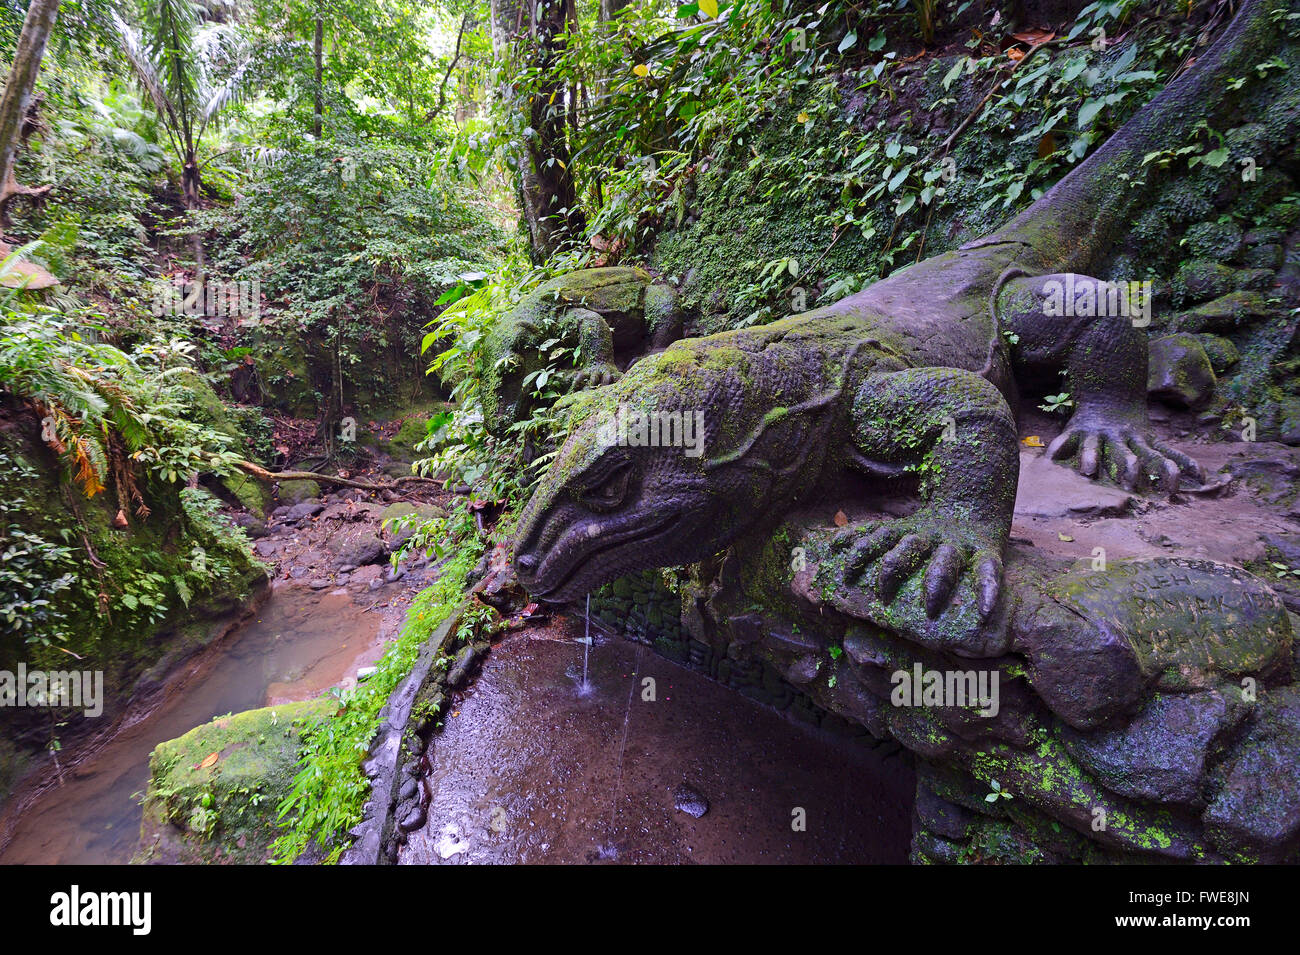 Comodo dragon staute, Primavera sacra tempio sacro Monkey Forest, Ubud, Bali, Indonesia Foto Stock